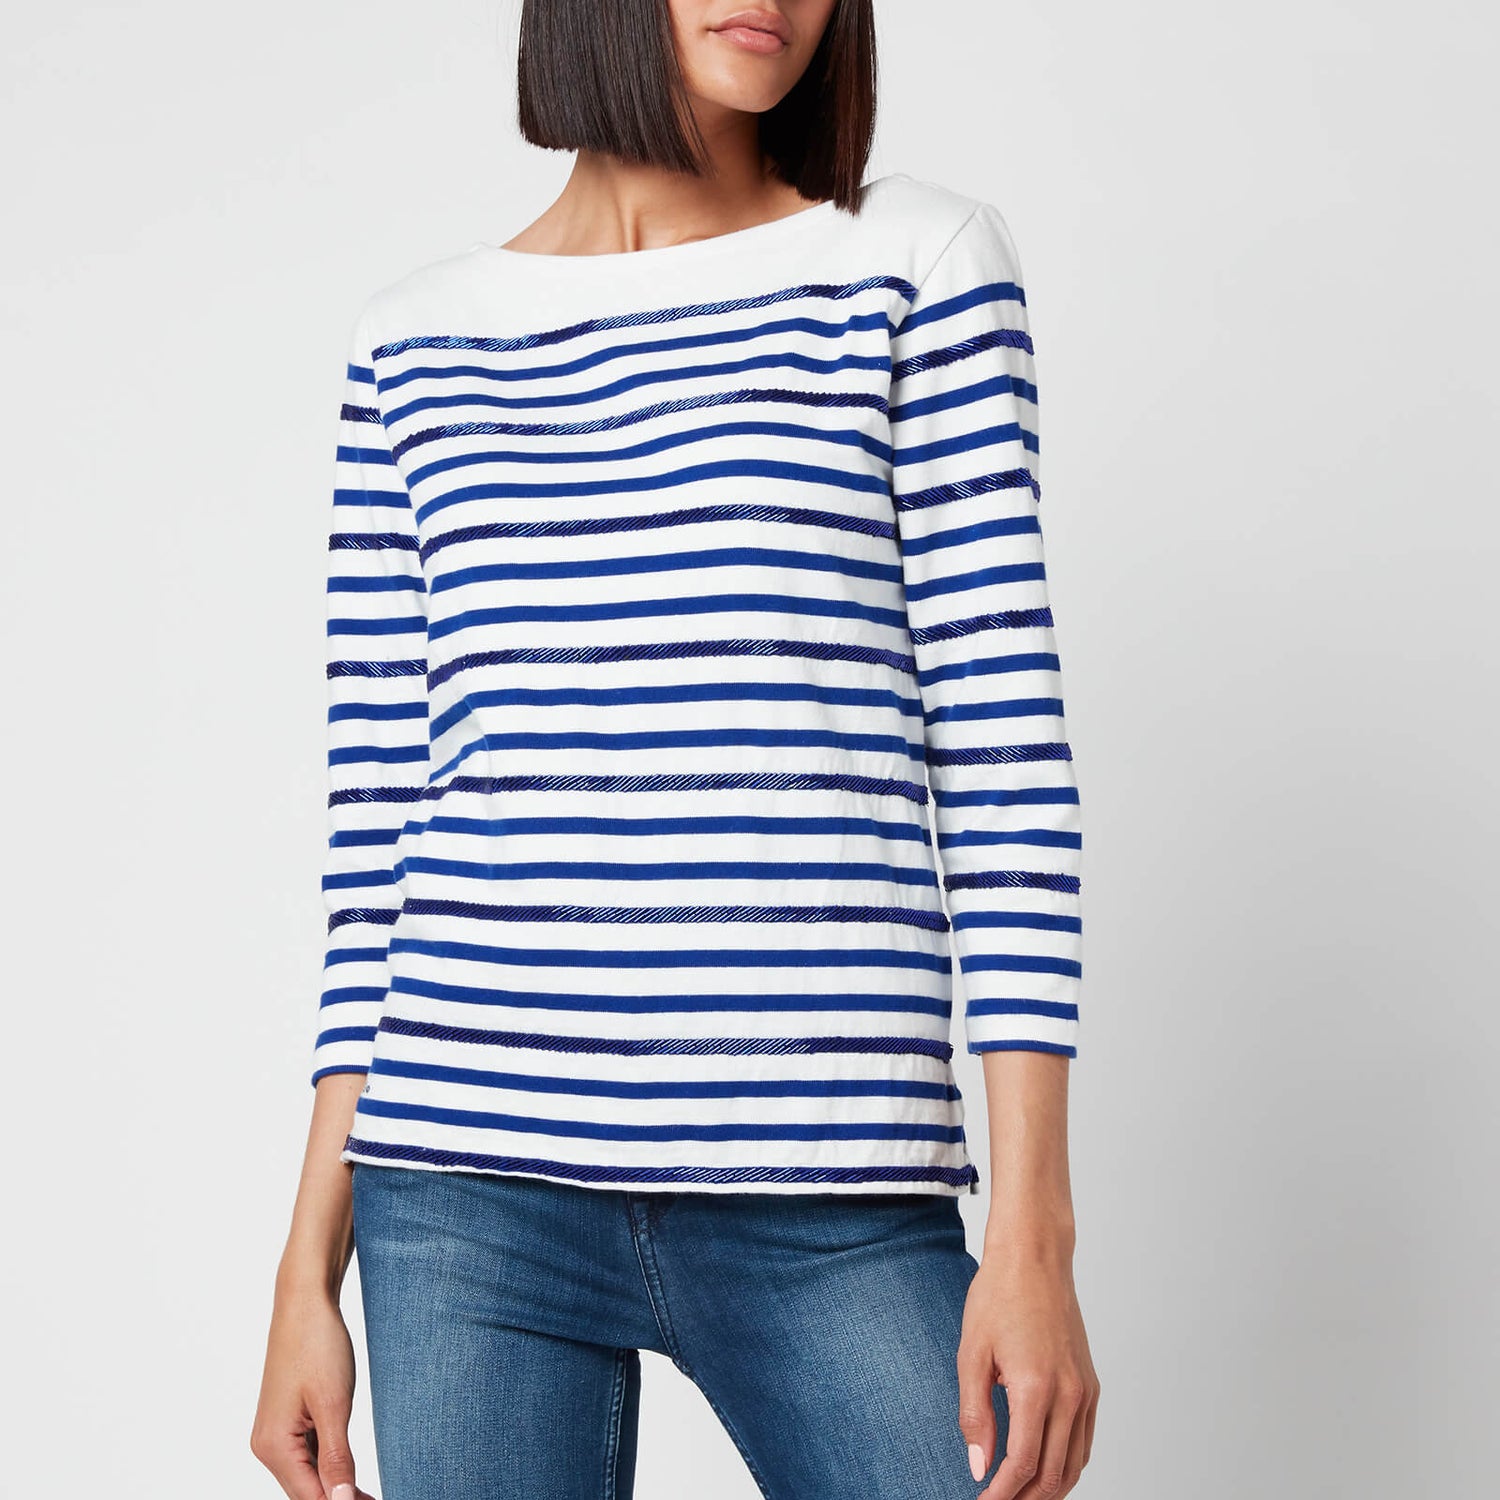 Polo Ralph Lauren Women's Stripe Logo T-Shirt - Deckwash White/Heritage Royal